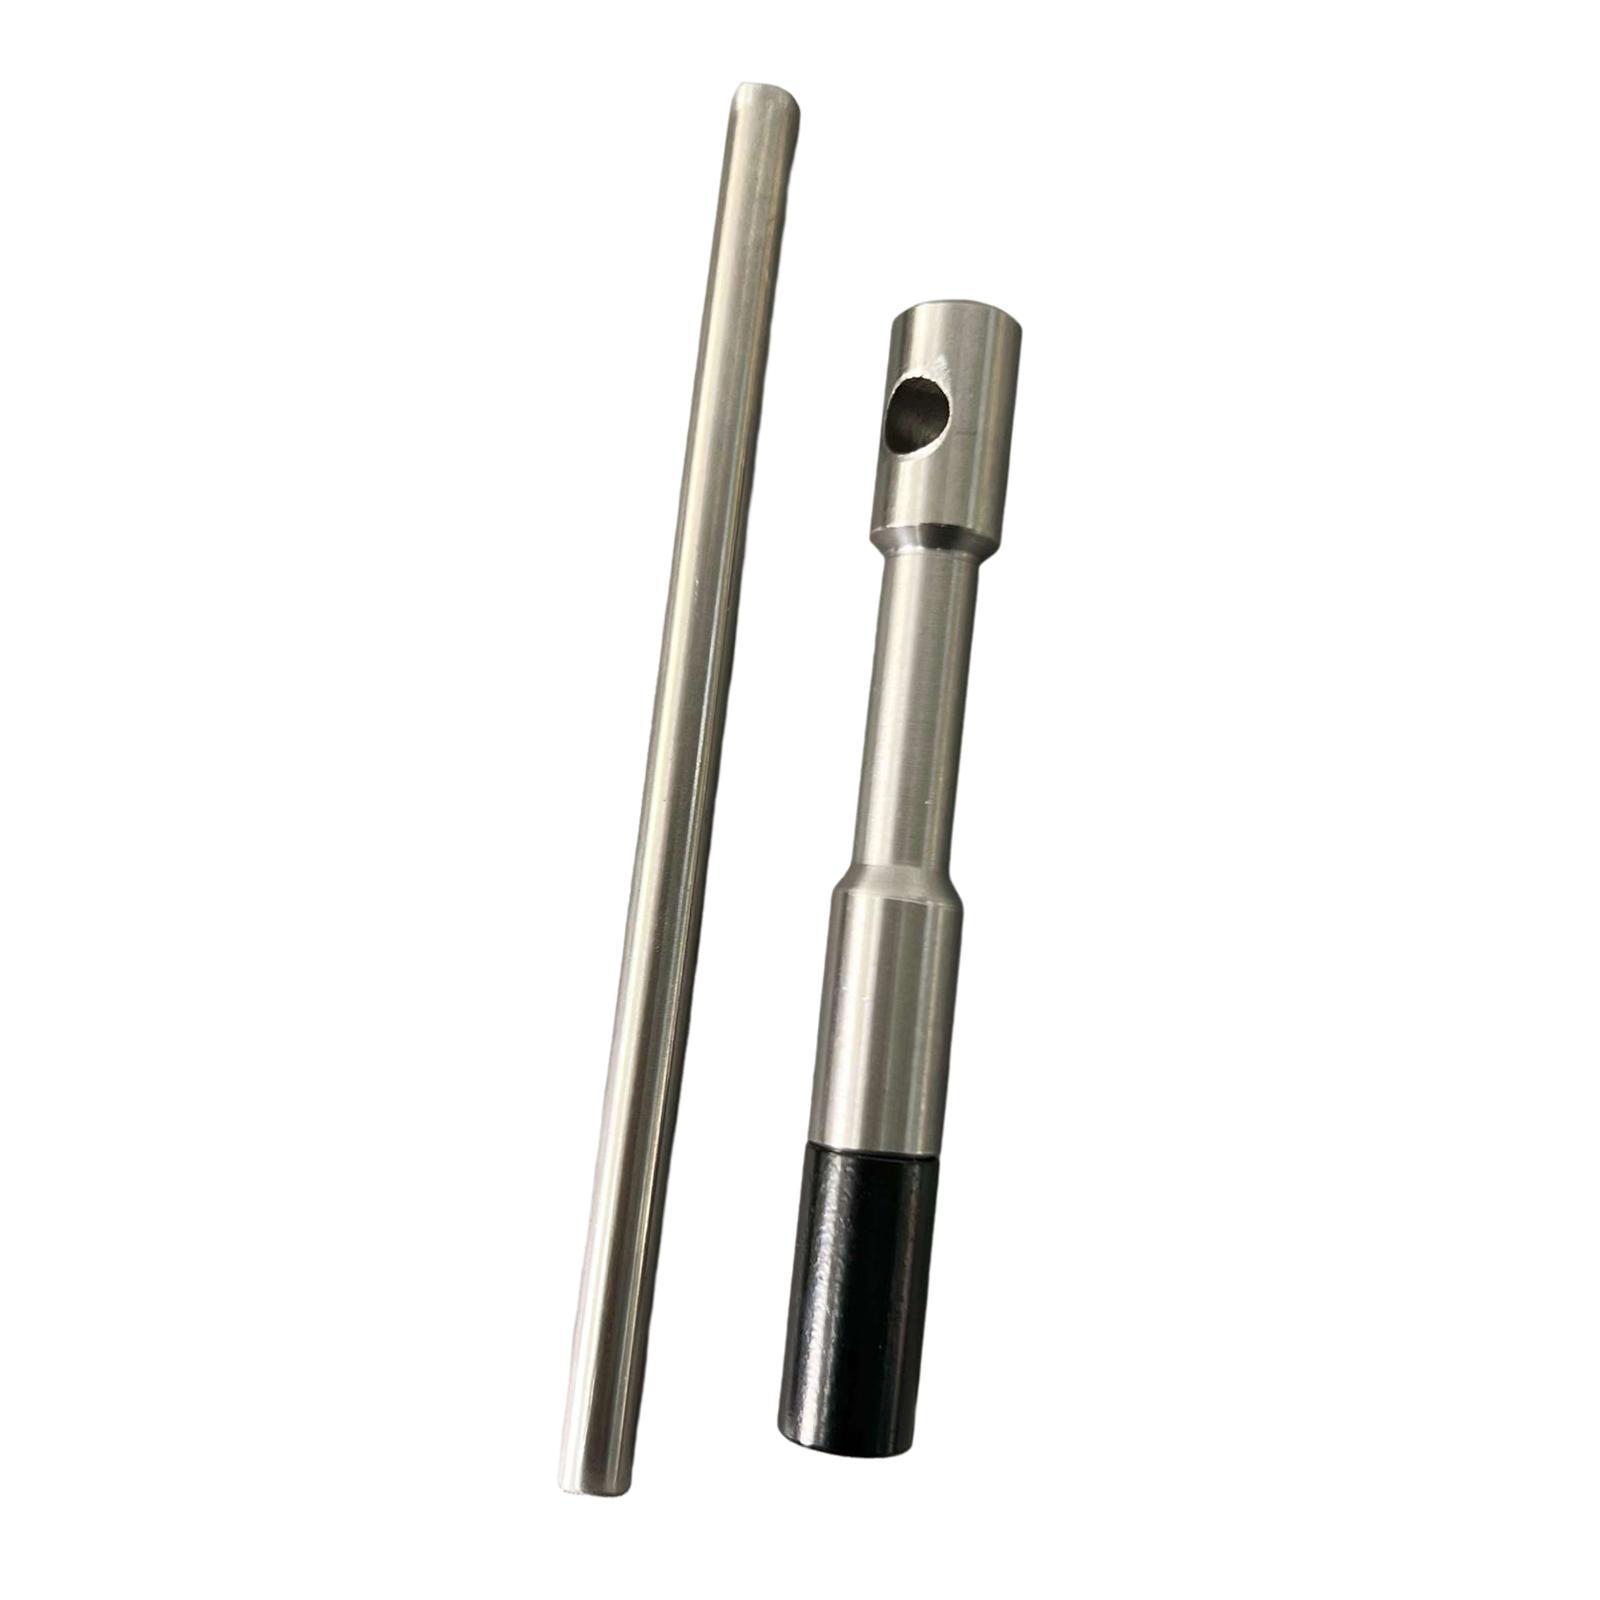 Ratchet Tap Wrench Multifuncation Hardware Tools Practical metal Handle